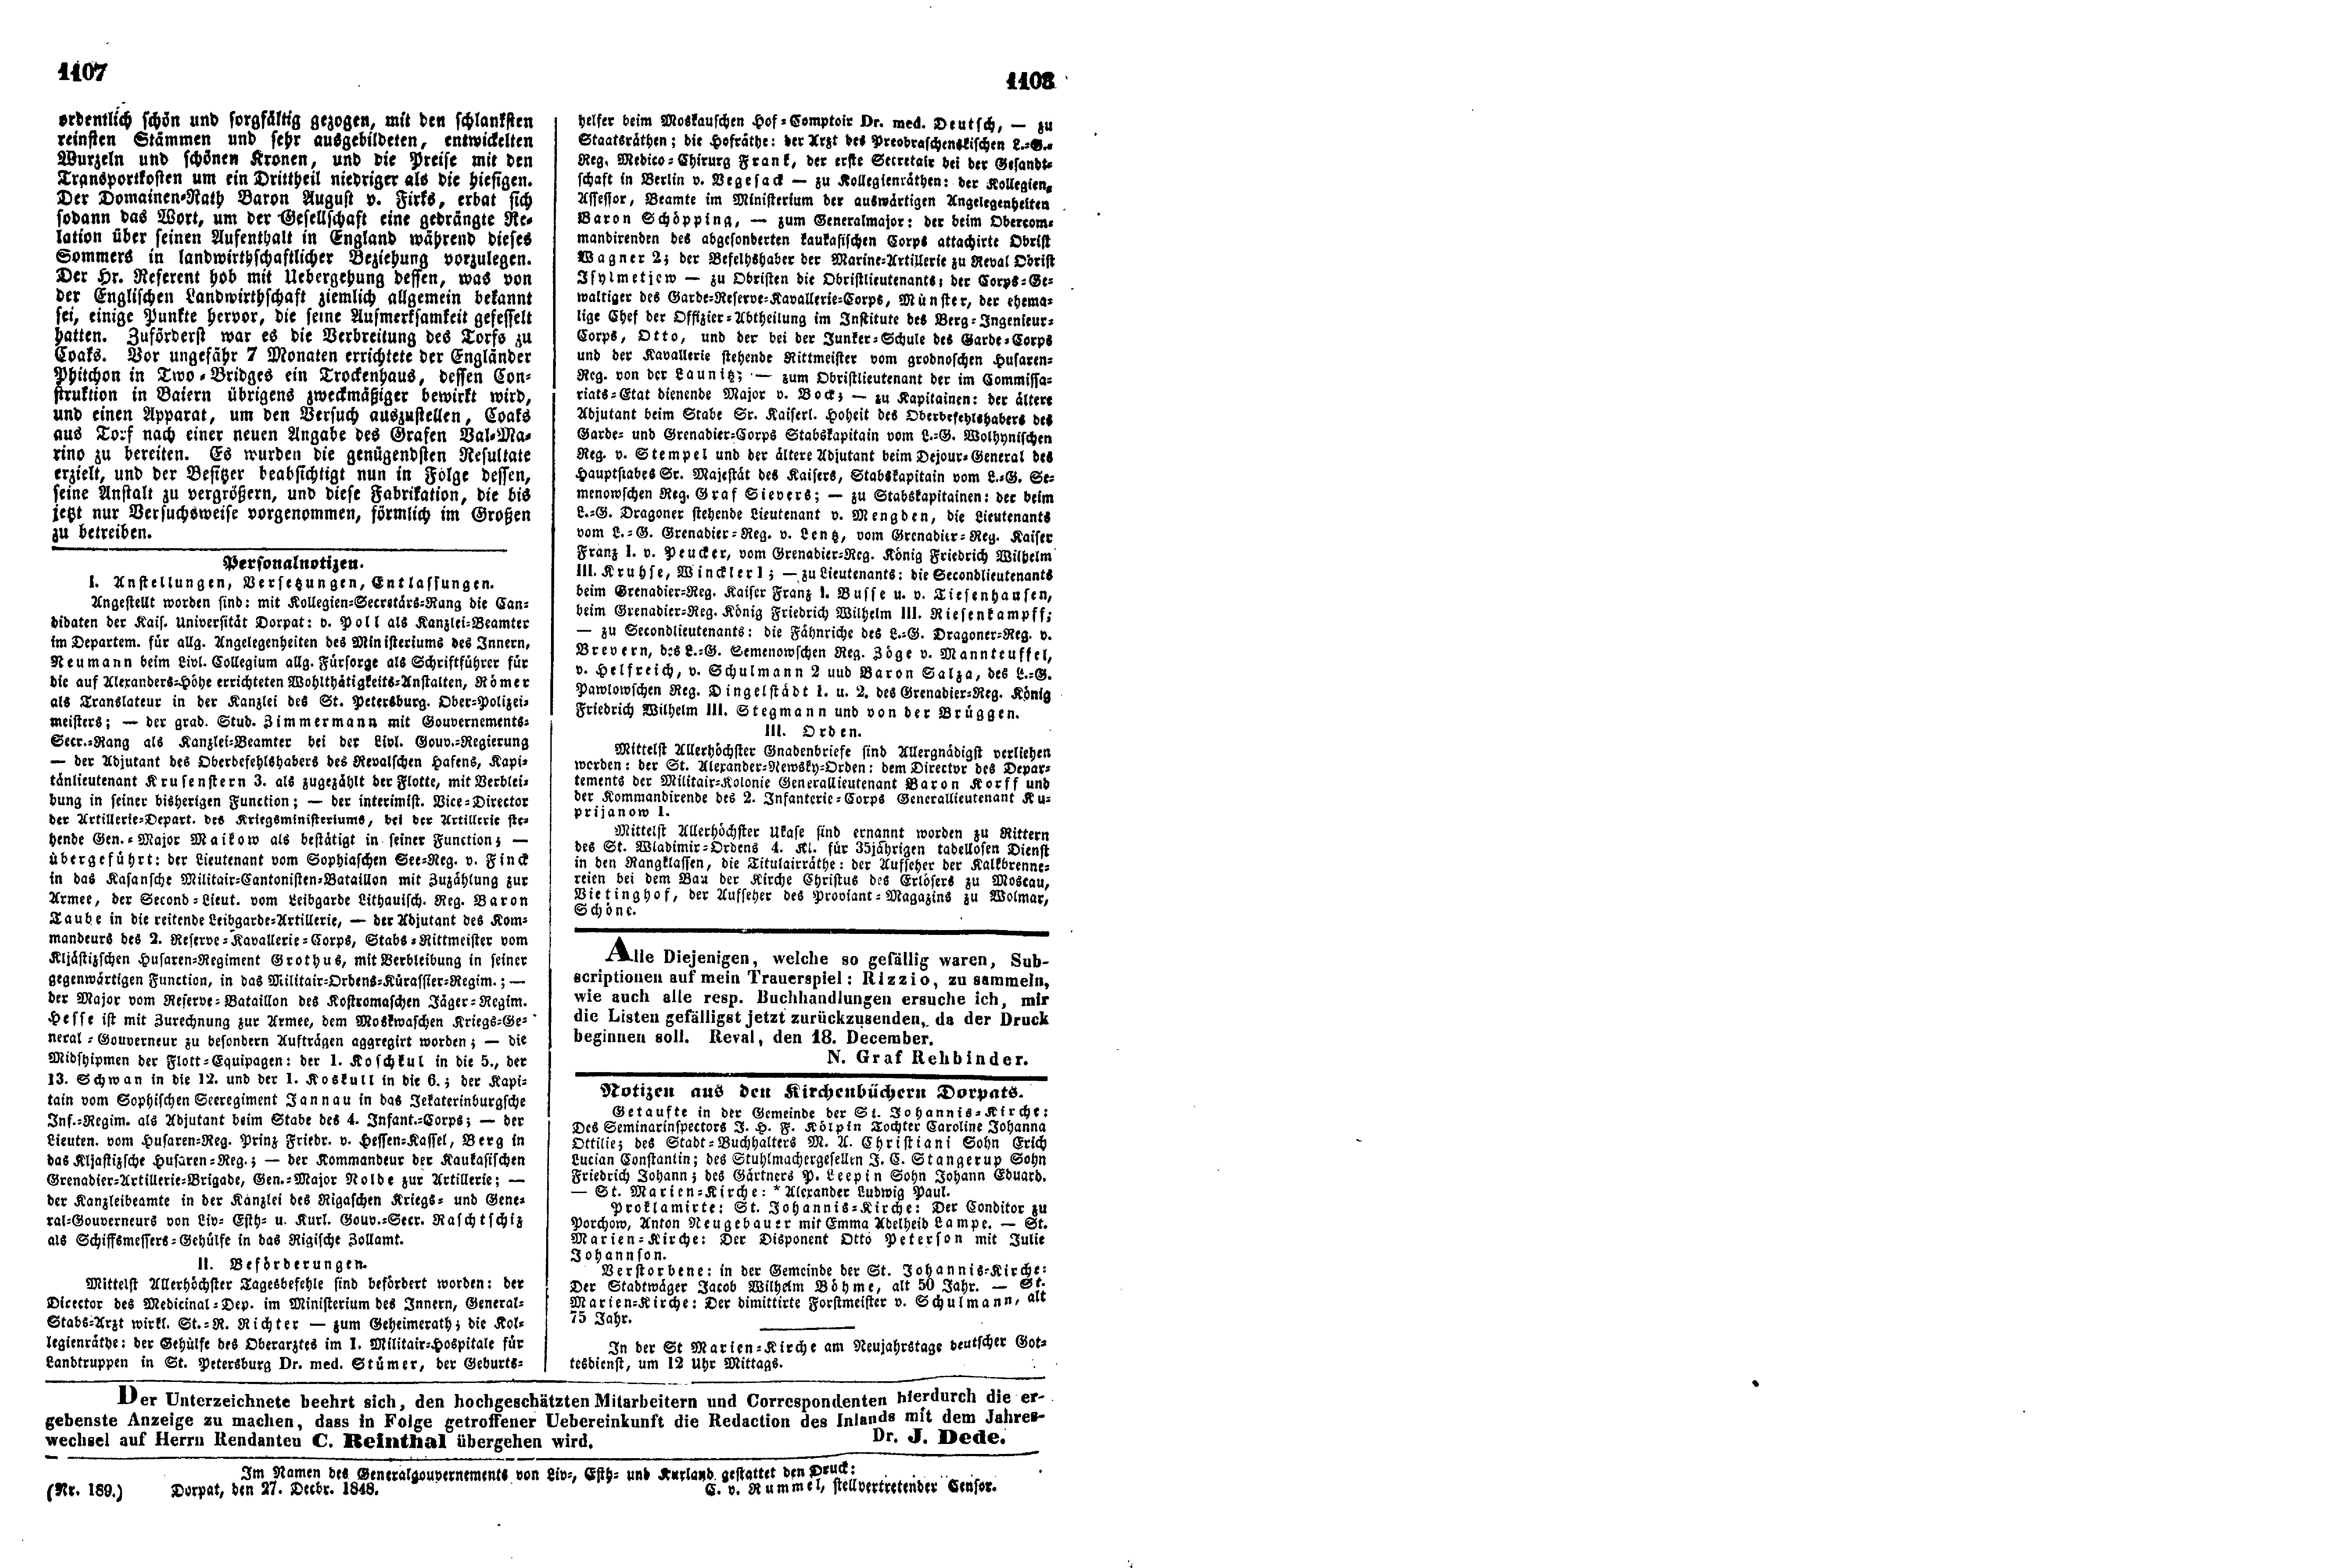 Das Inland [13] (1848) | 291. (1107) Main body of text